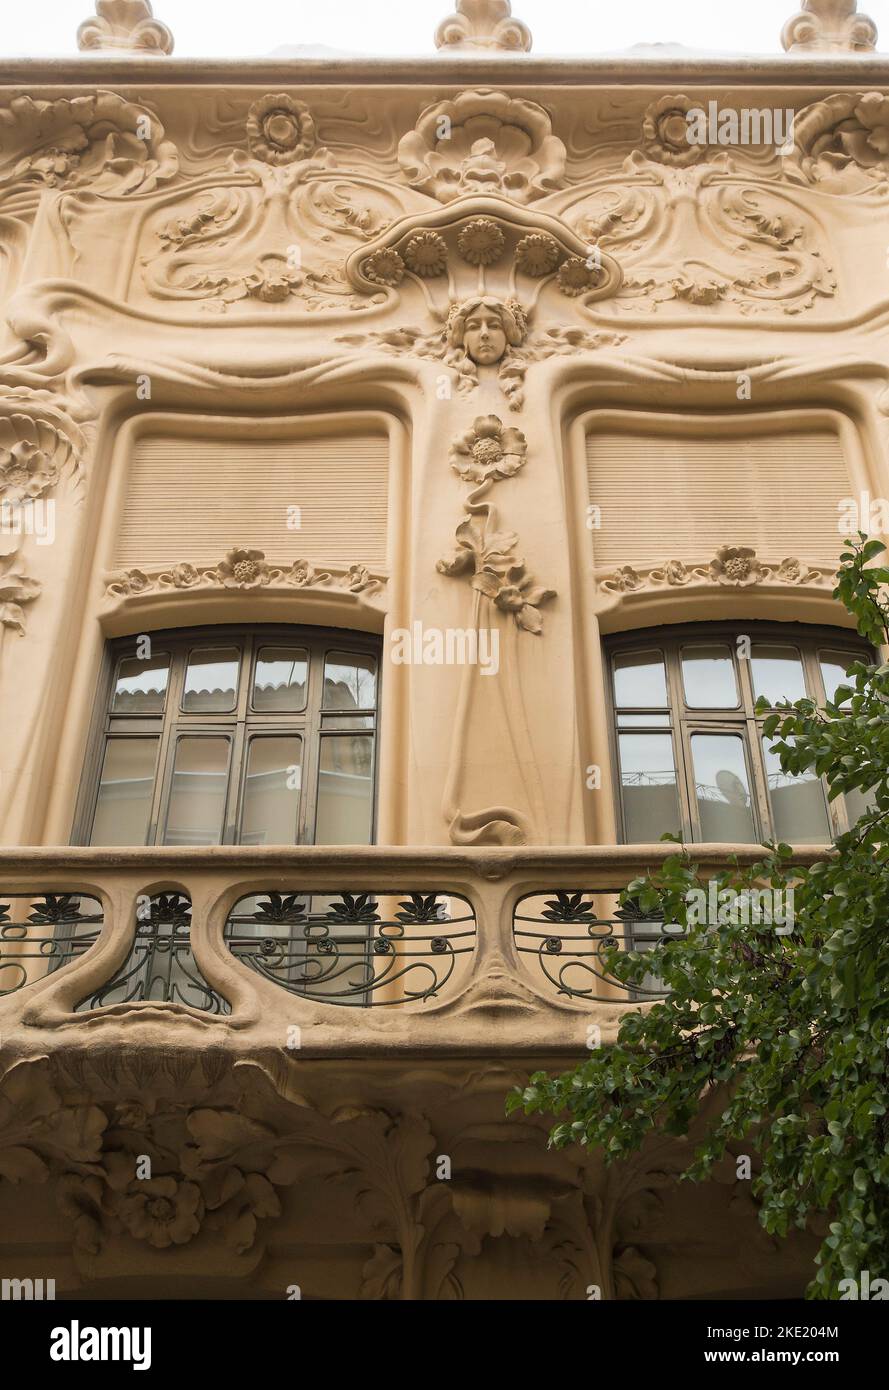 Detalles arquitectónicos Art Nouveau en construcción en Madrid, España Foto de stock